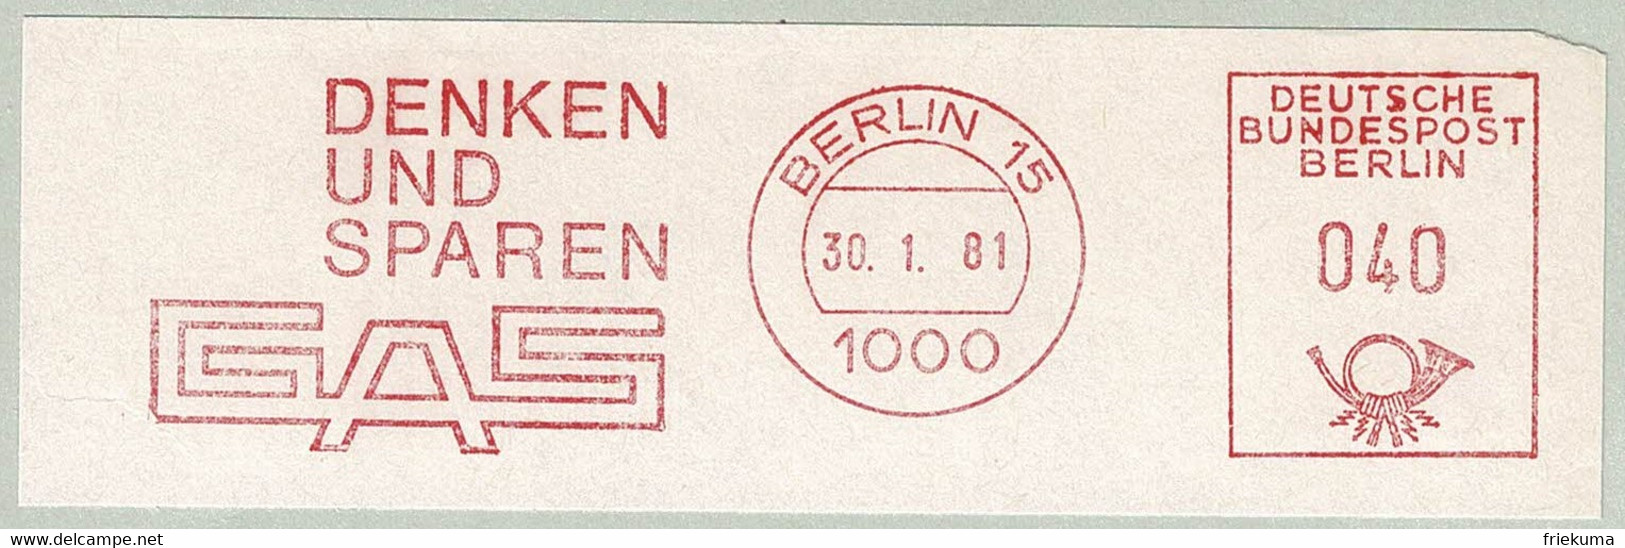 Deutsche Bundespost 1981, Freistempel / EMA / Meterstamp Gas / Gaz Berlin, Energie / Energy - Gaz